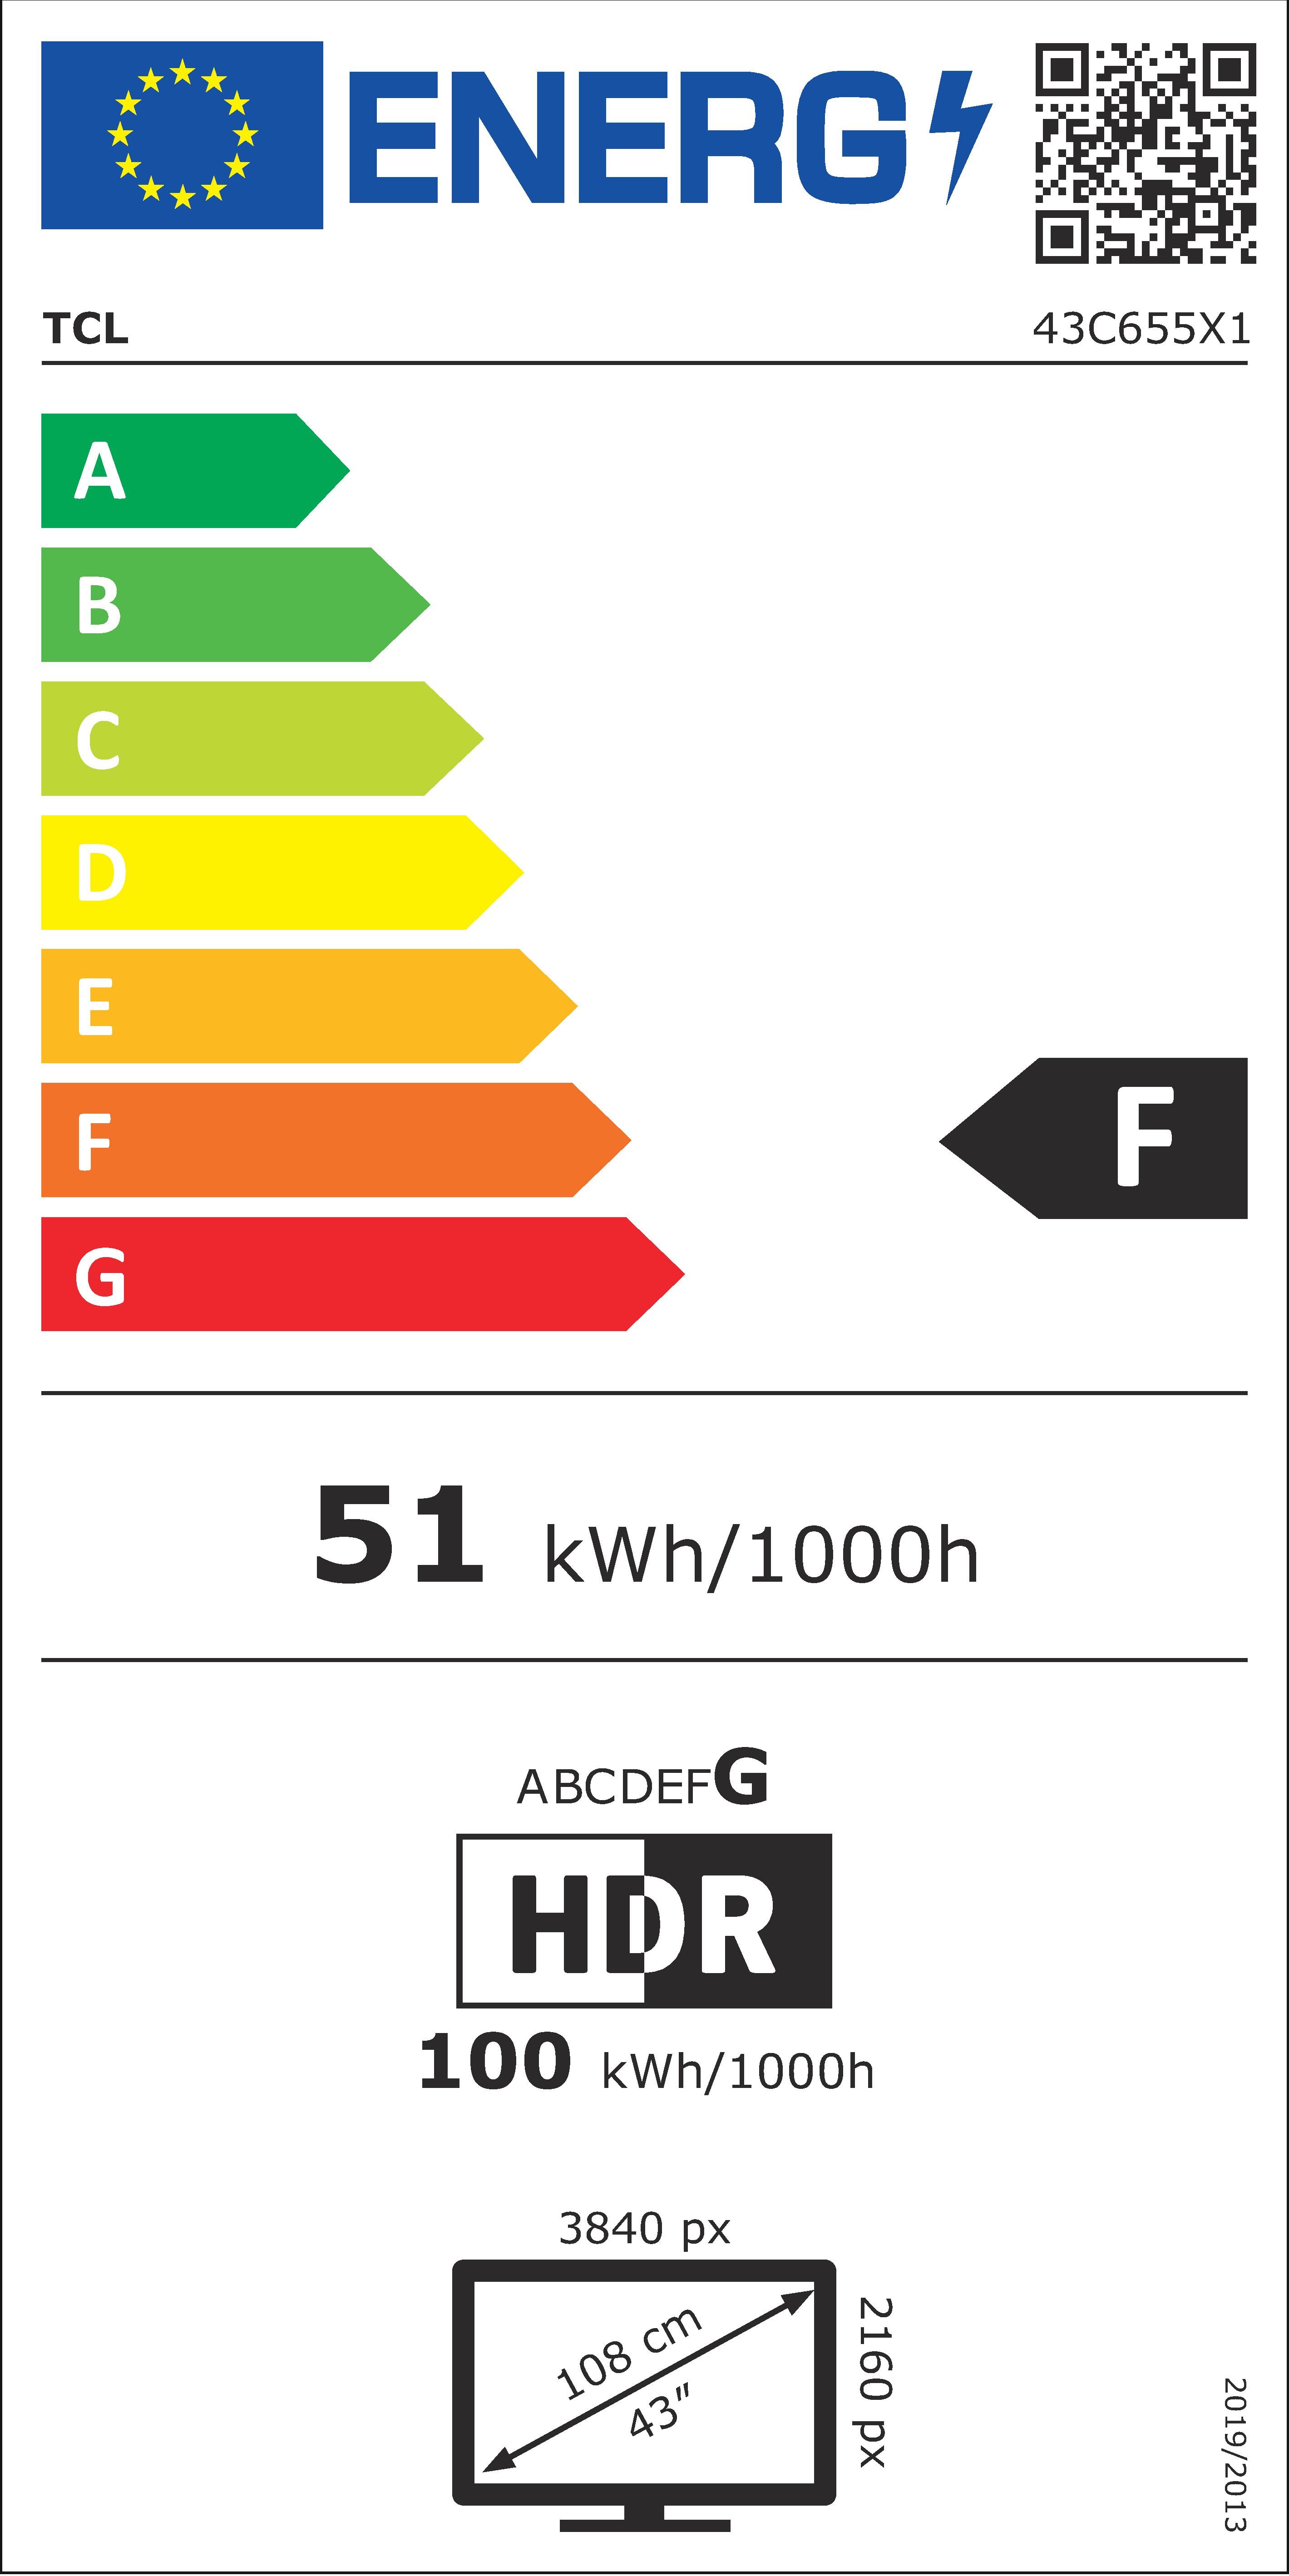 Etiqueta de Eficiencia Energética - 43C655